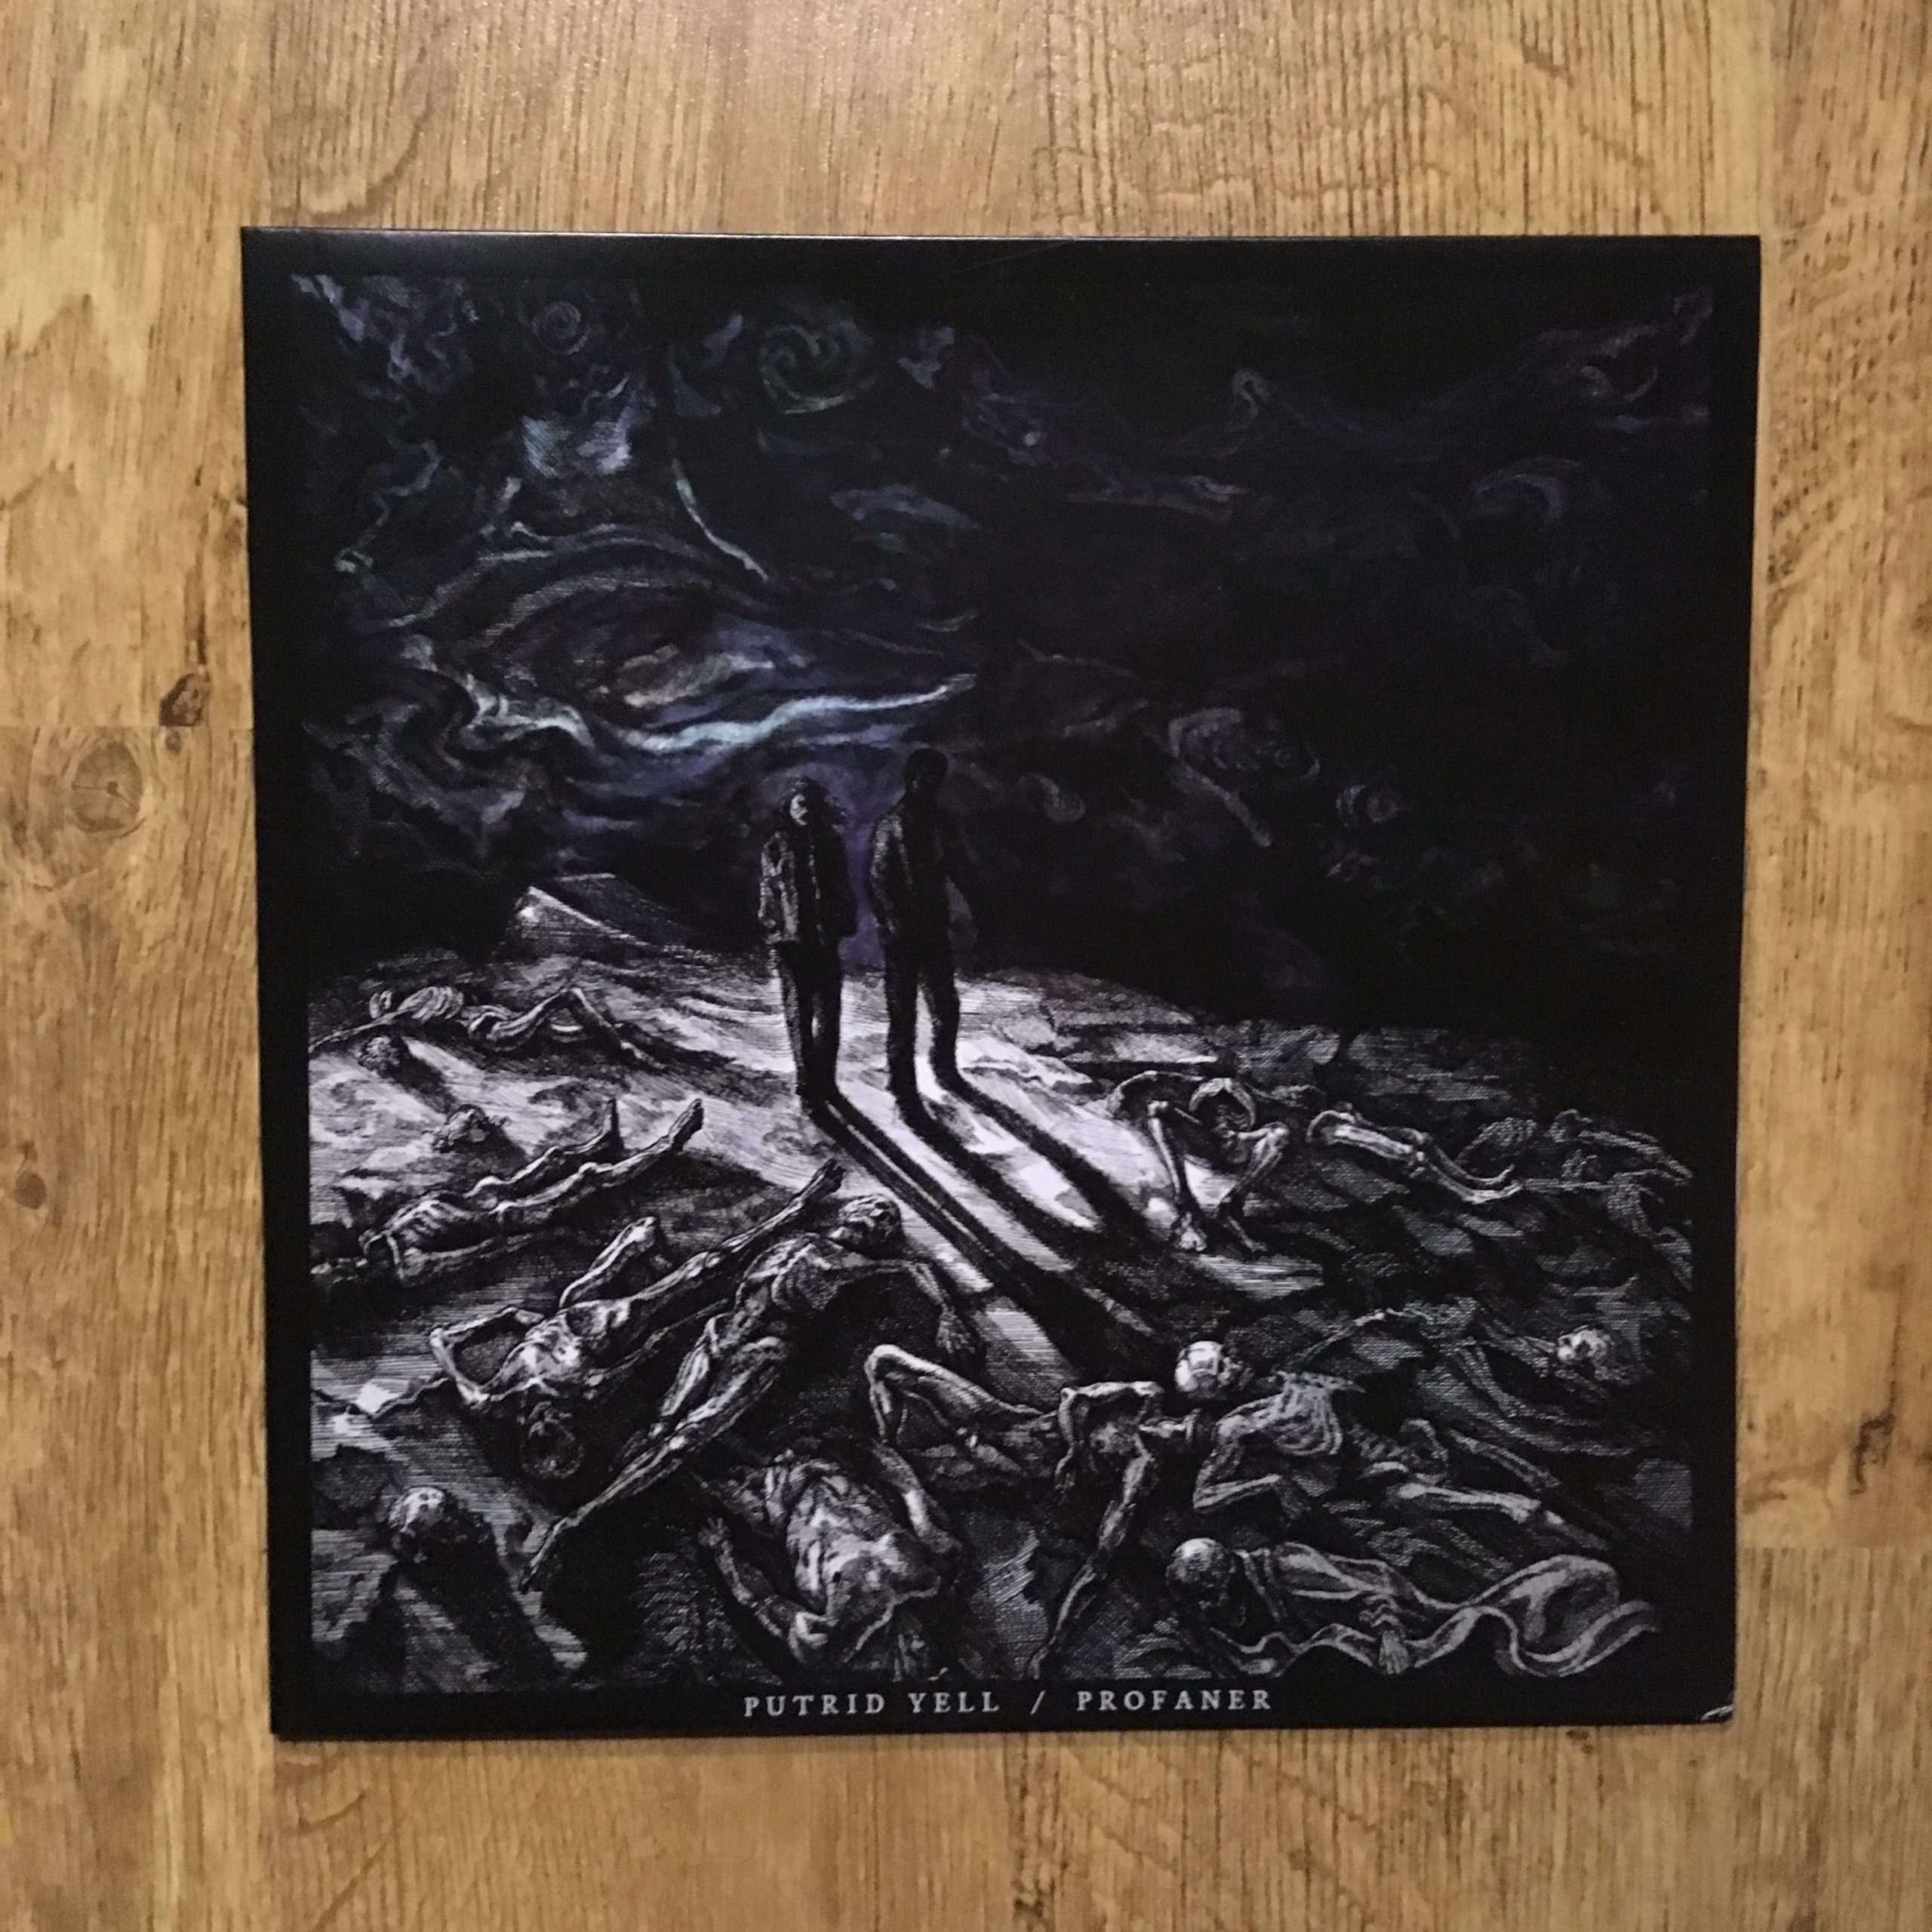 Photo of the Profaner / Putrid Yell - "The Beginning of the Mortuary Decay" split LP (Black vinyl)